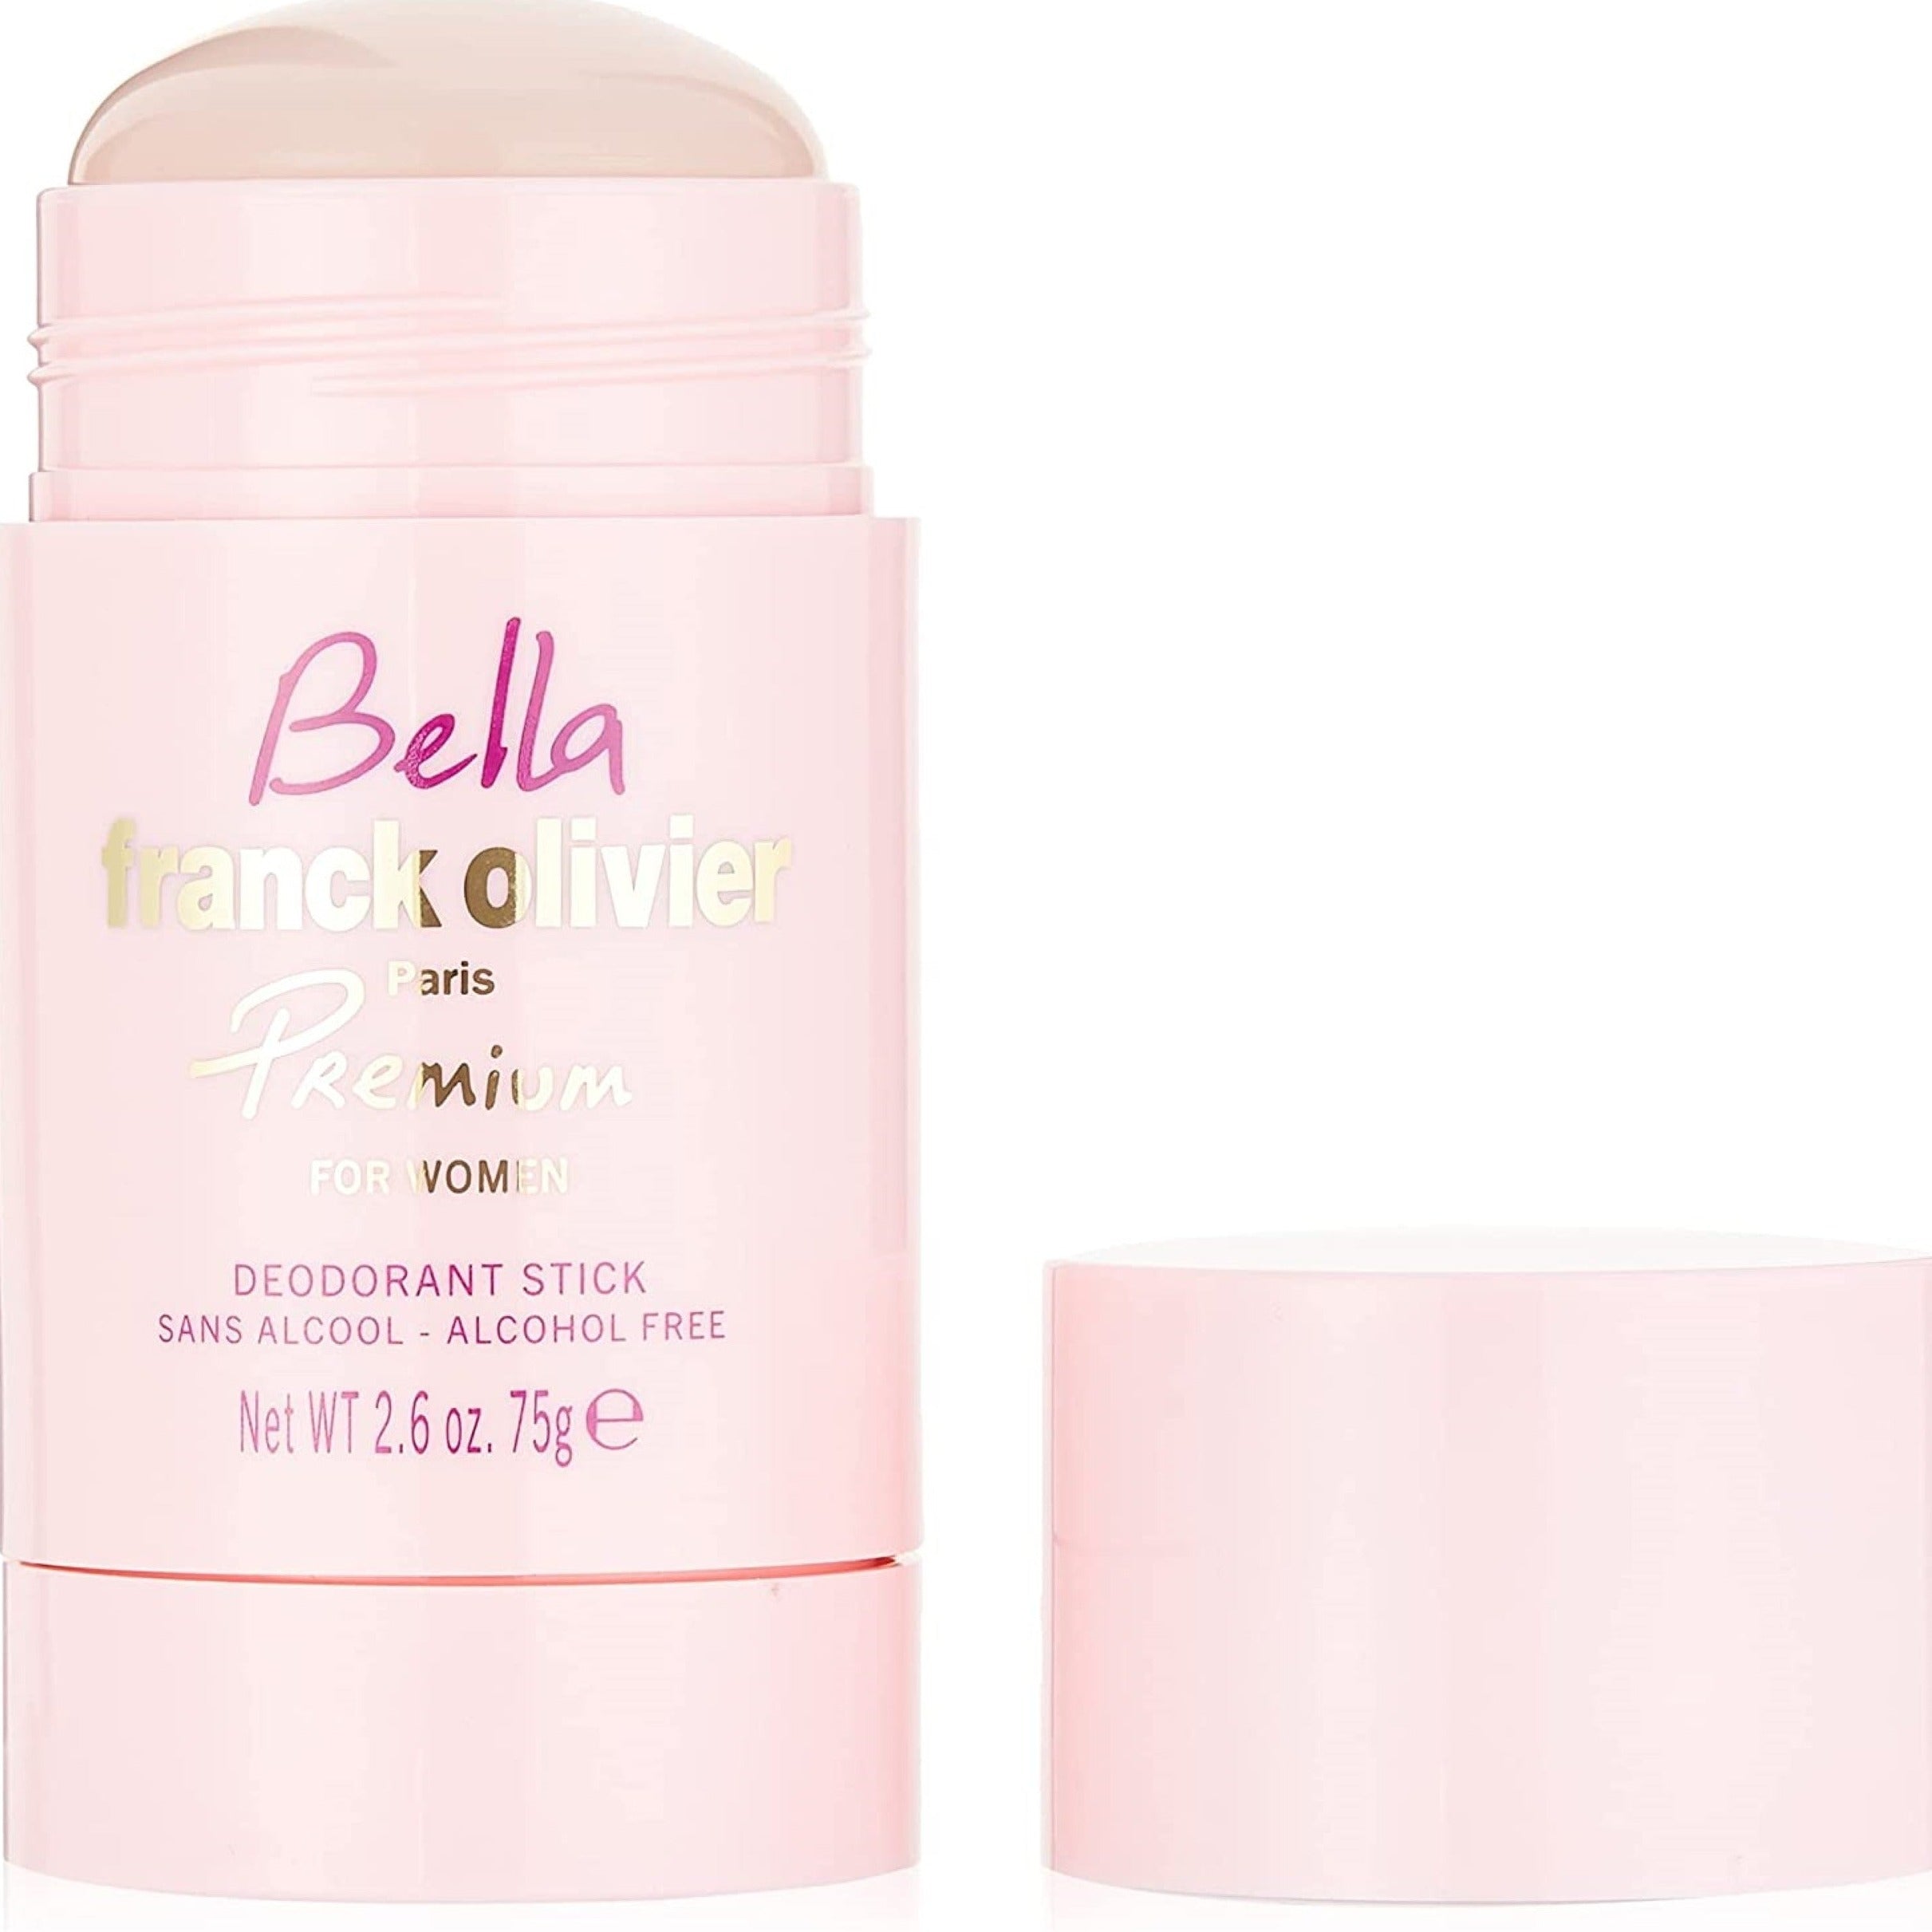 Franck Olivier Premium Bella Deodorant Stick | My Perfume Shop Australia